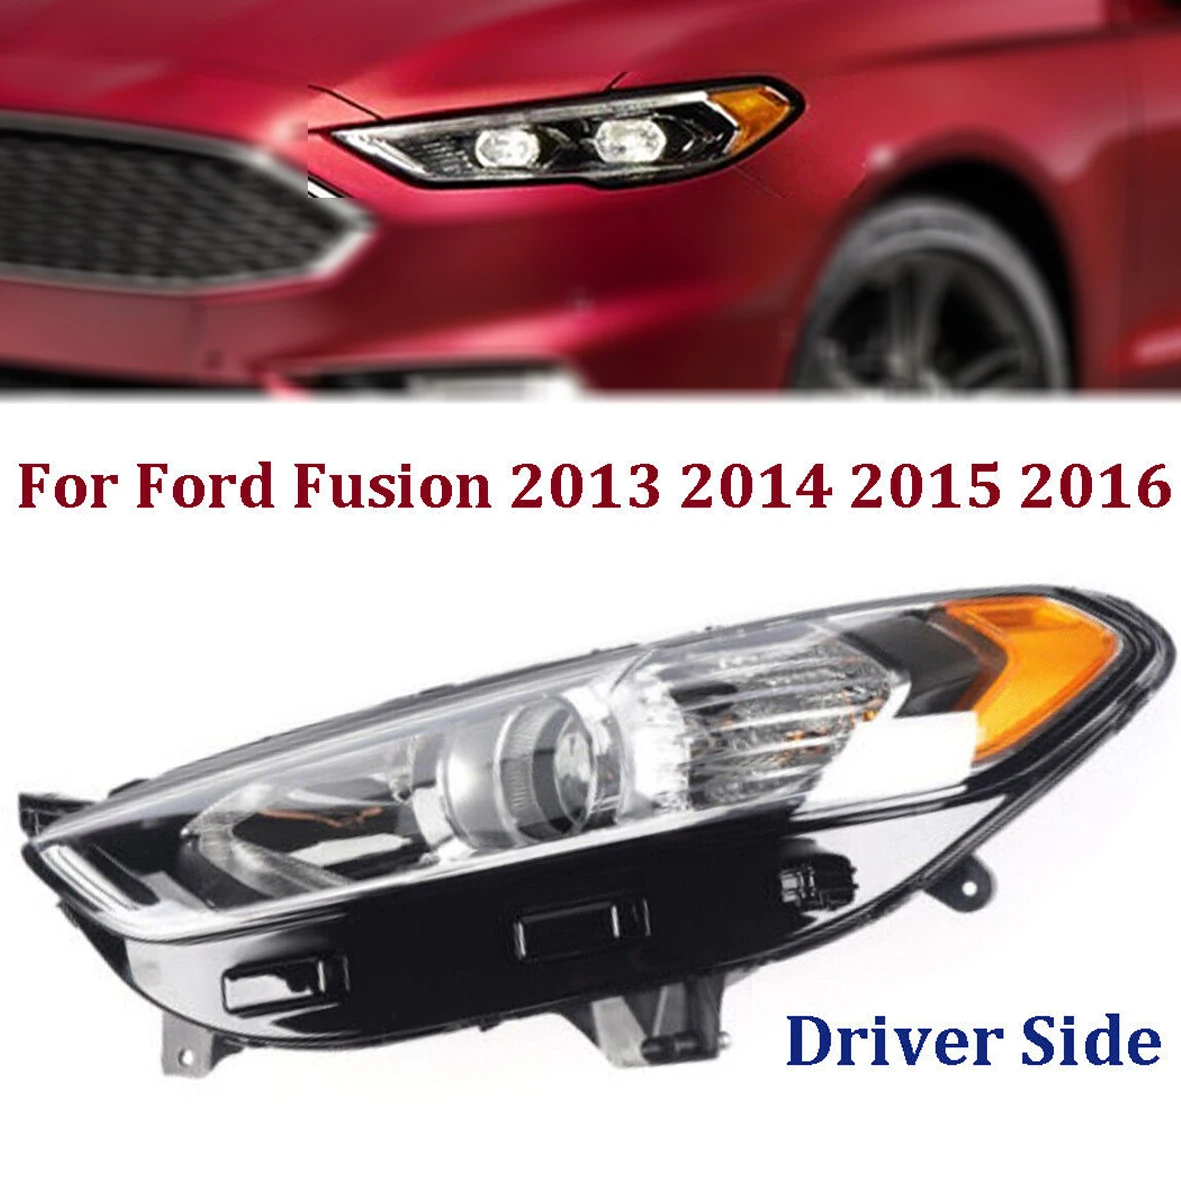 

Driver Side Headlight Halogen Chrome Durable Left Side Headlamp Fits For 2013- 2016 Ford Fusion 4 Door Sedan New Headlight